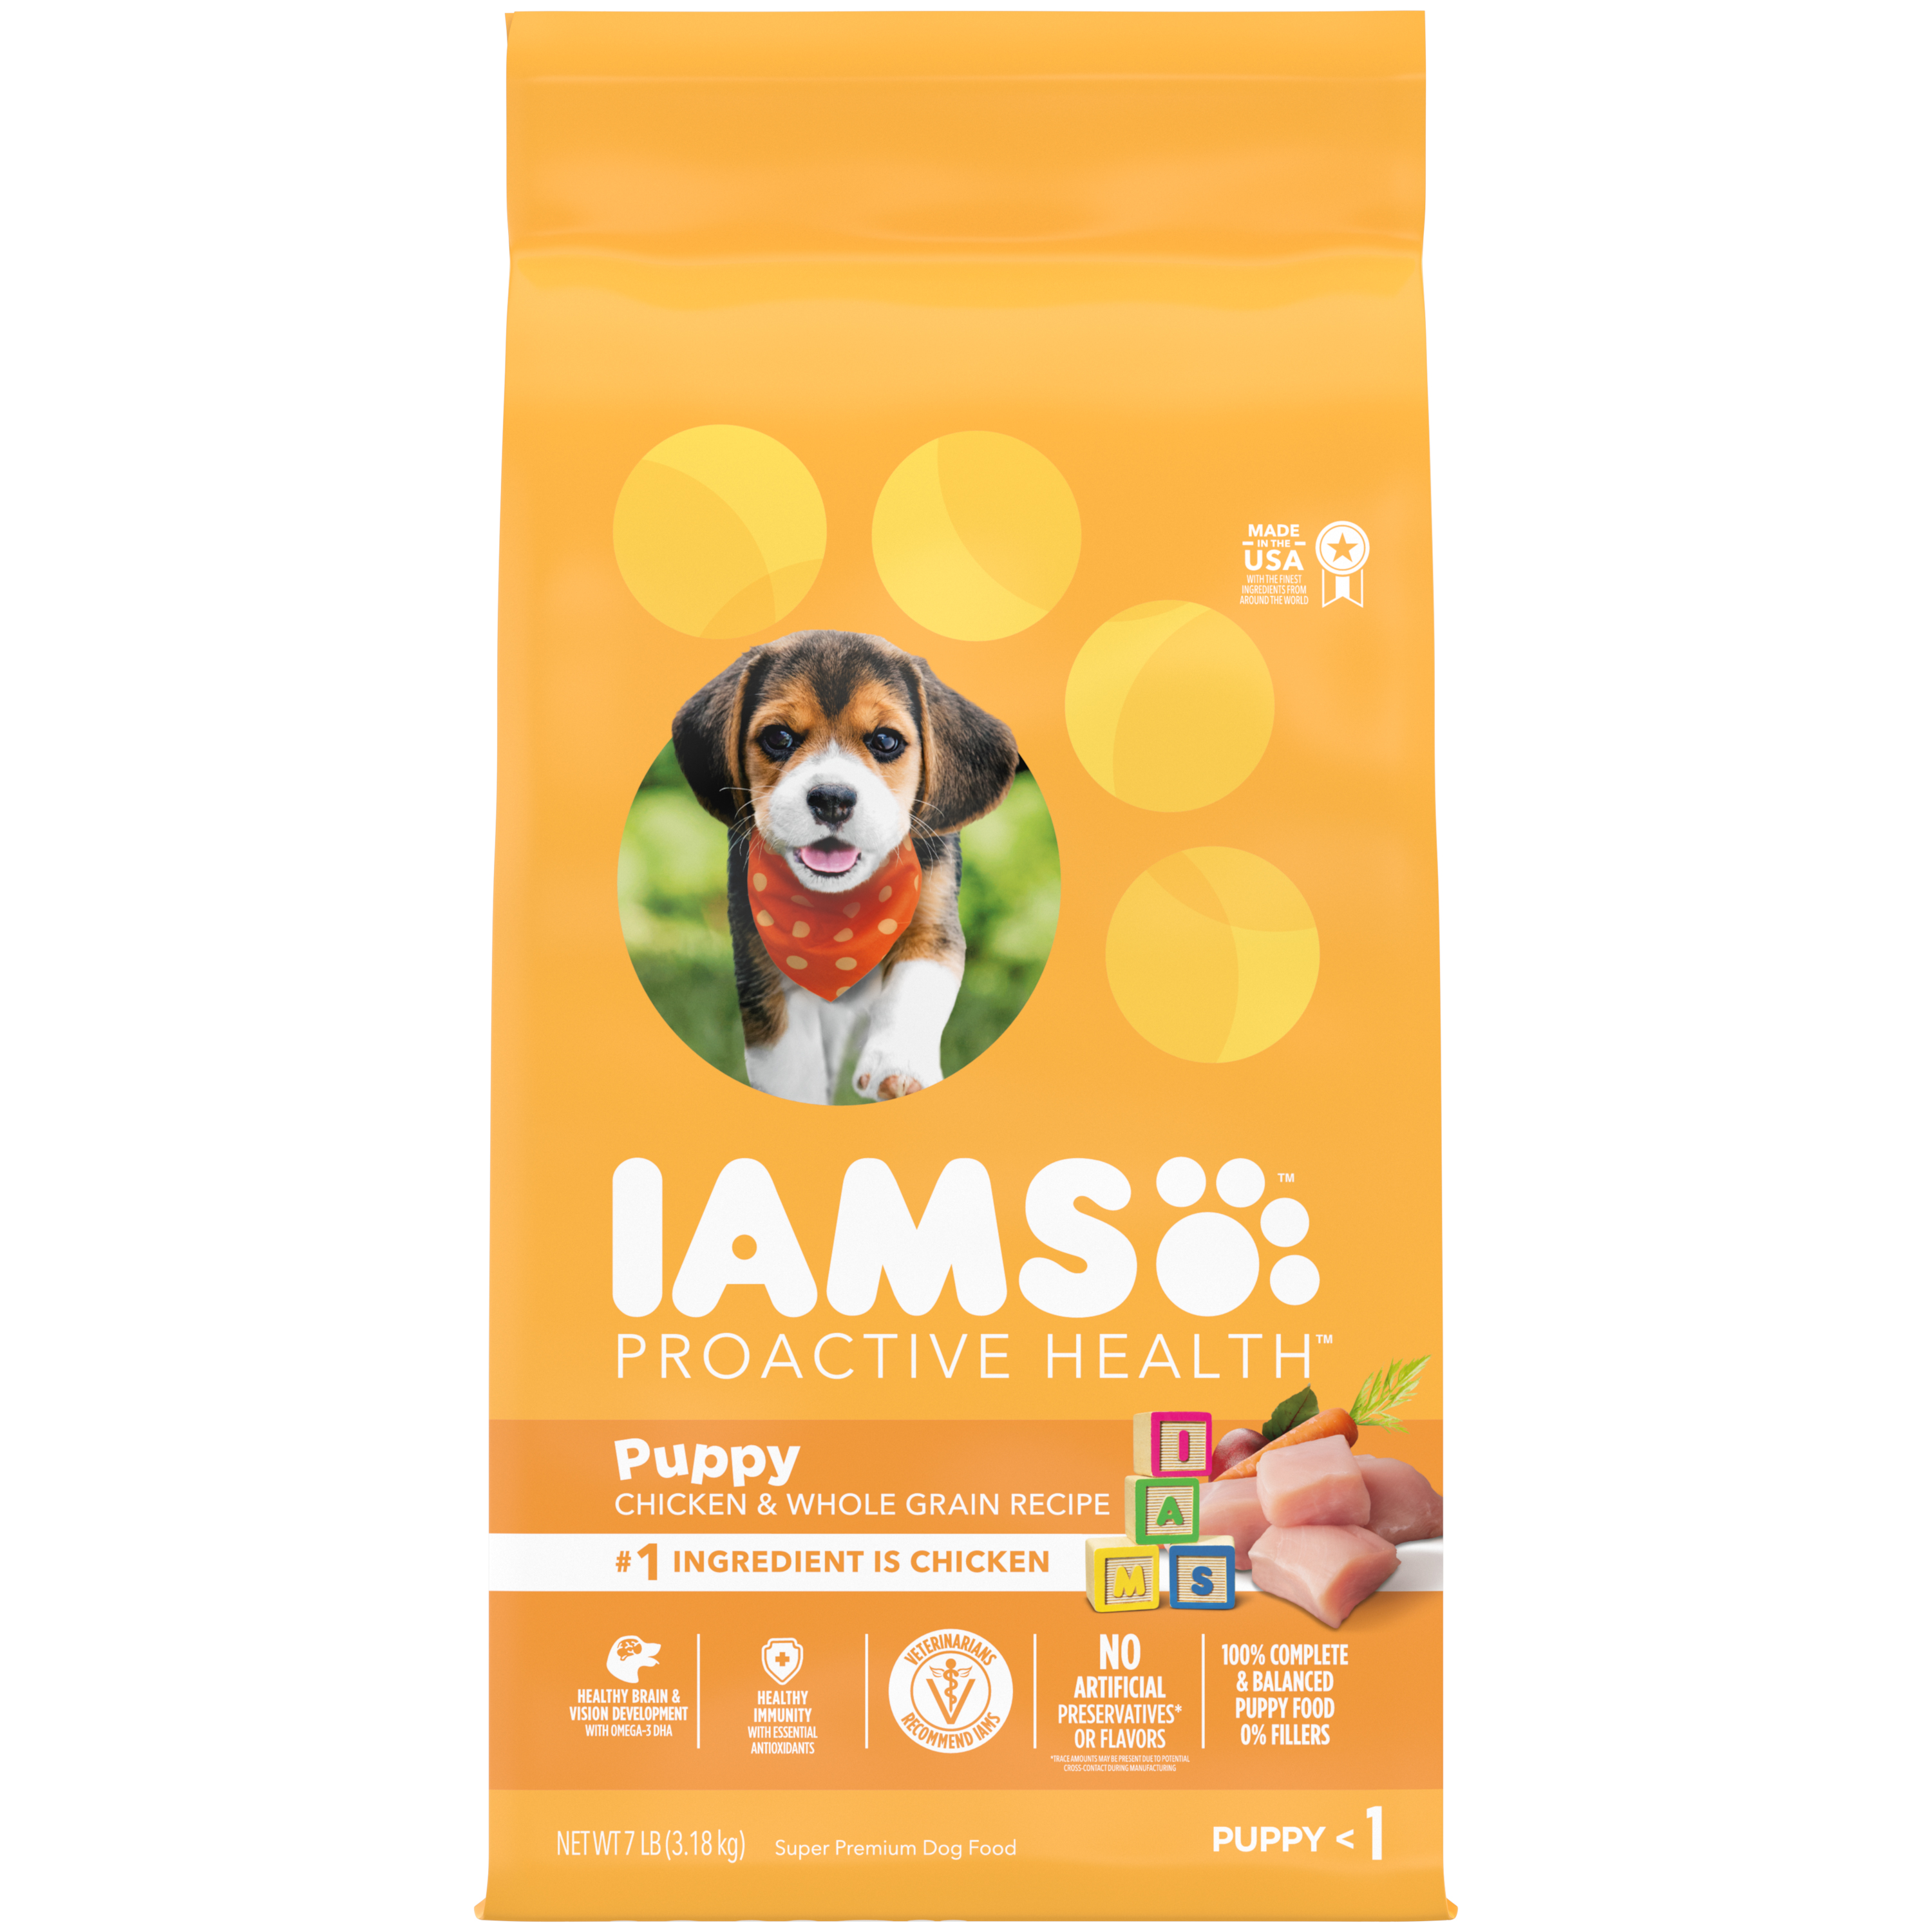 7 Lb Iams Smart Puppy - Health/First Aid